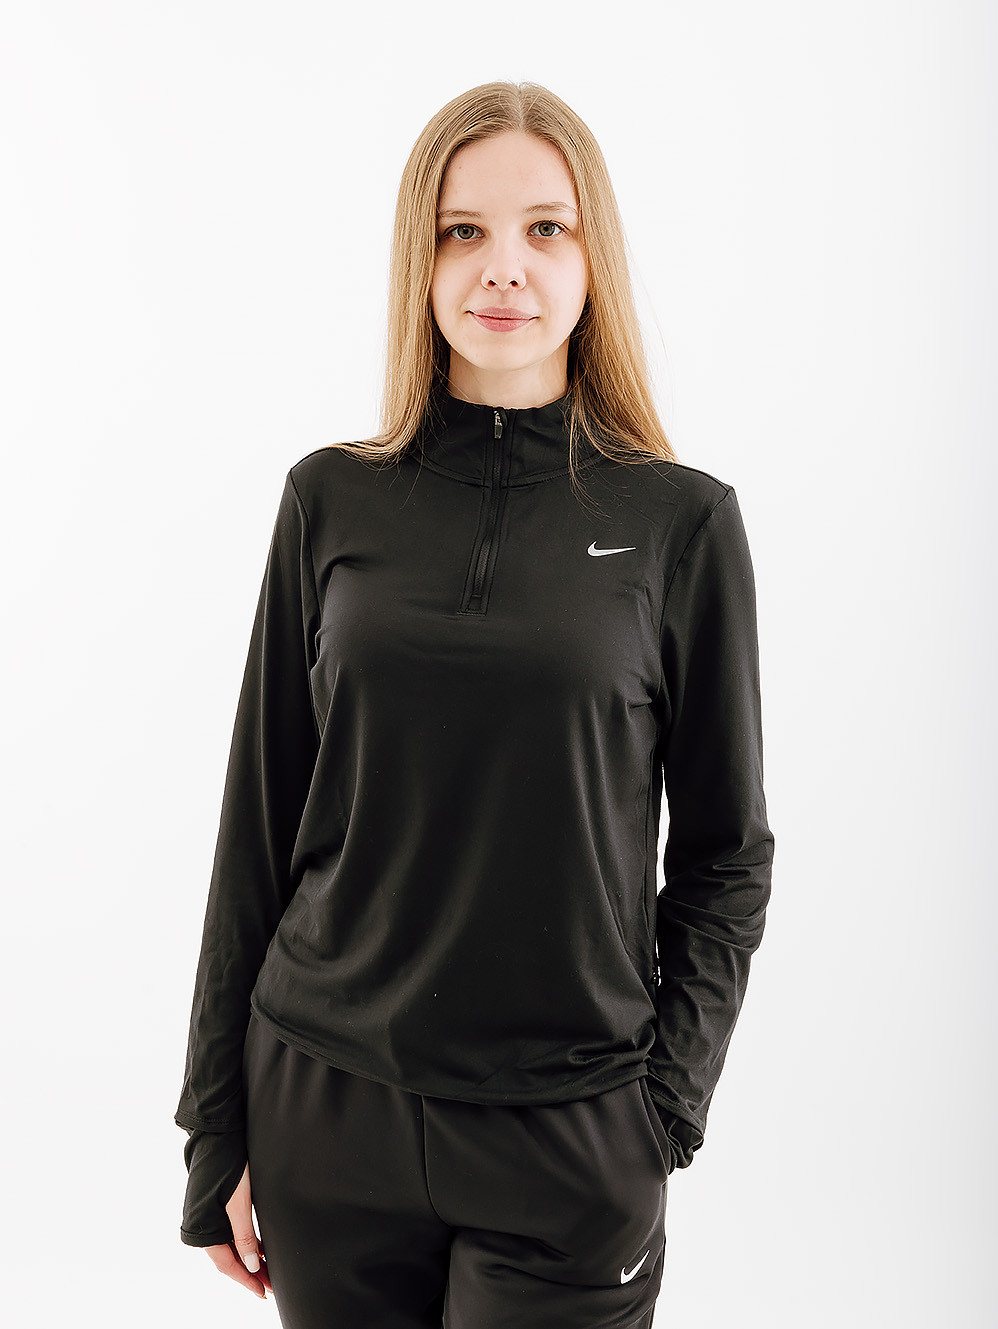 Кофта Nike SWIFT TOP FB4316-010